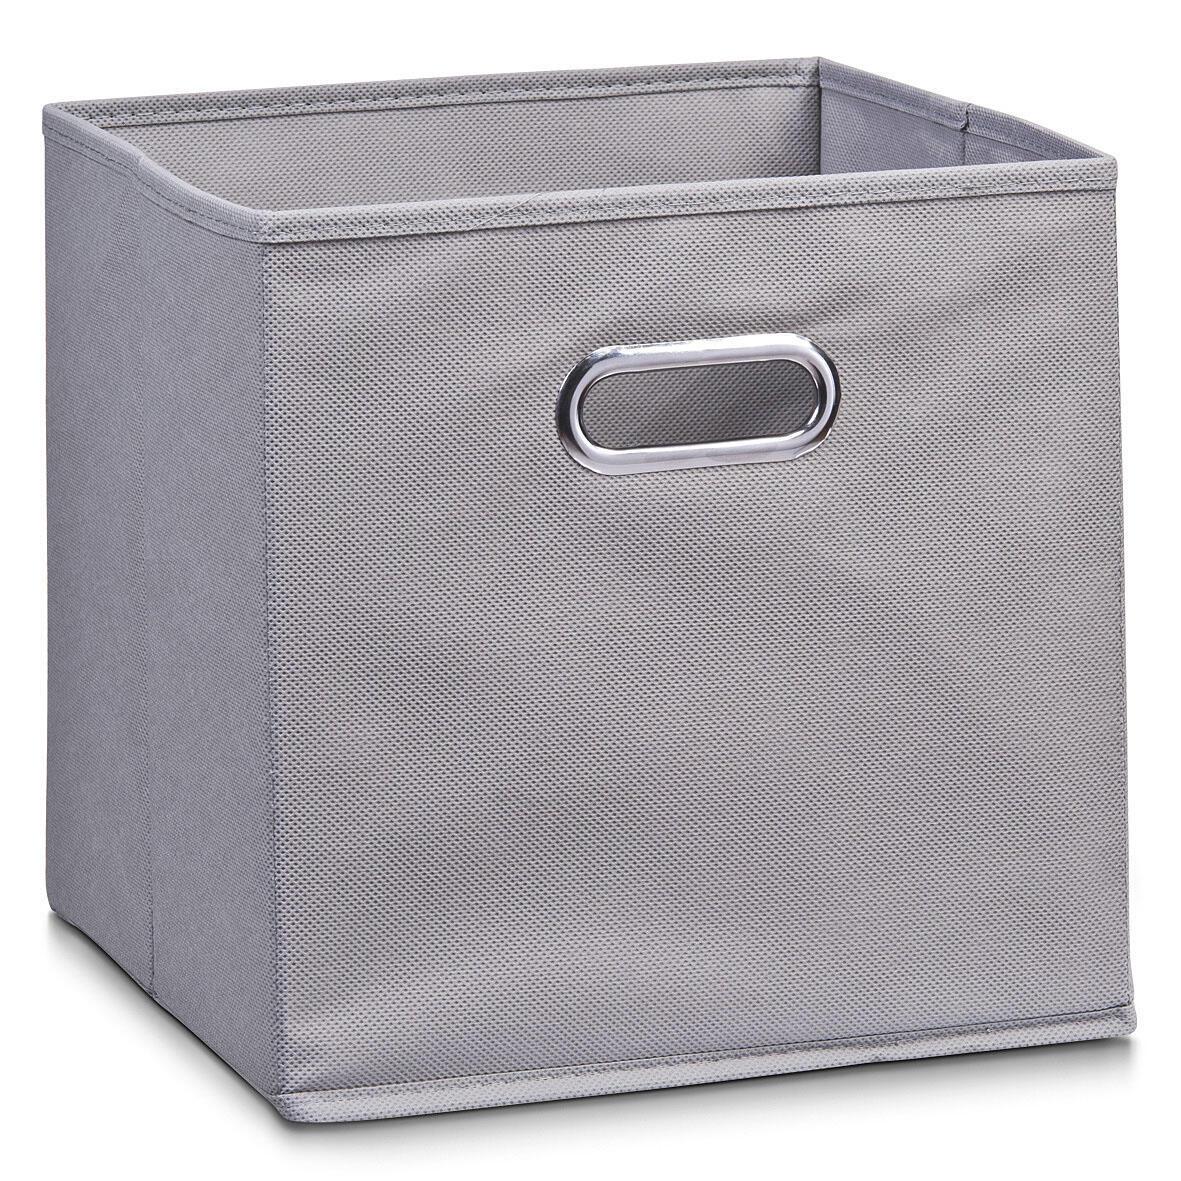 Zeller Aufbewahrungsboxen Aufbewahrungsbox Vlies grau 30,0 l - 32,0 x 32,0 x 32,0 cm grau